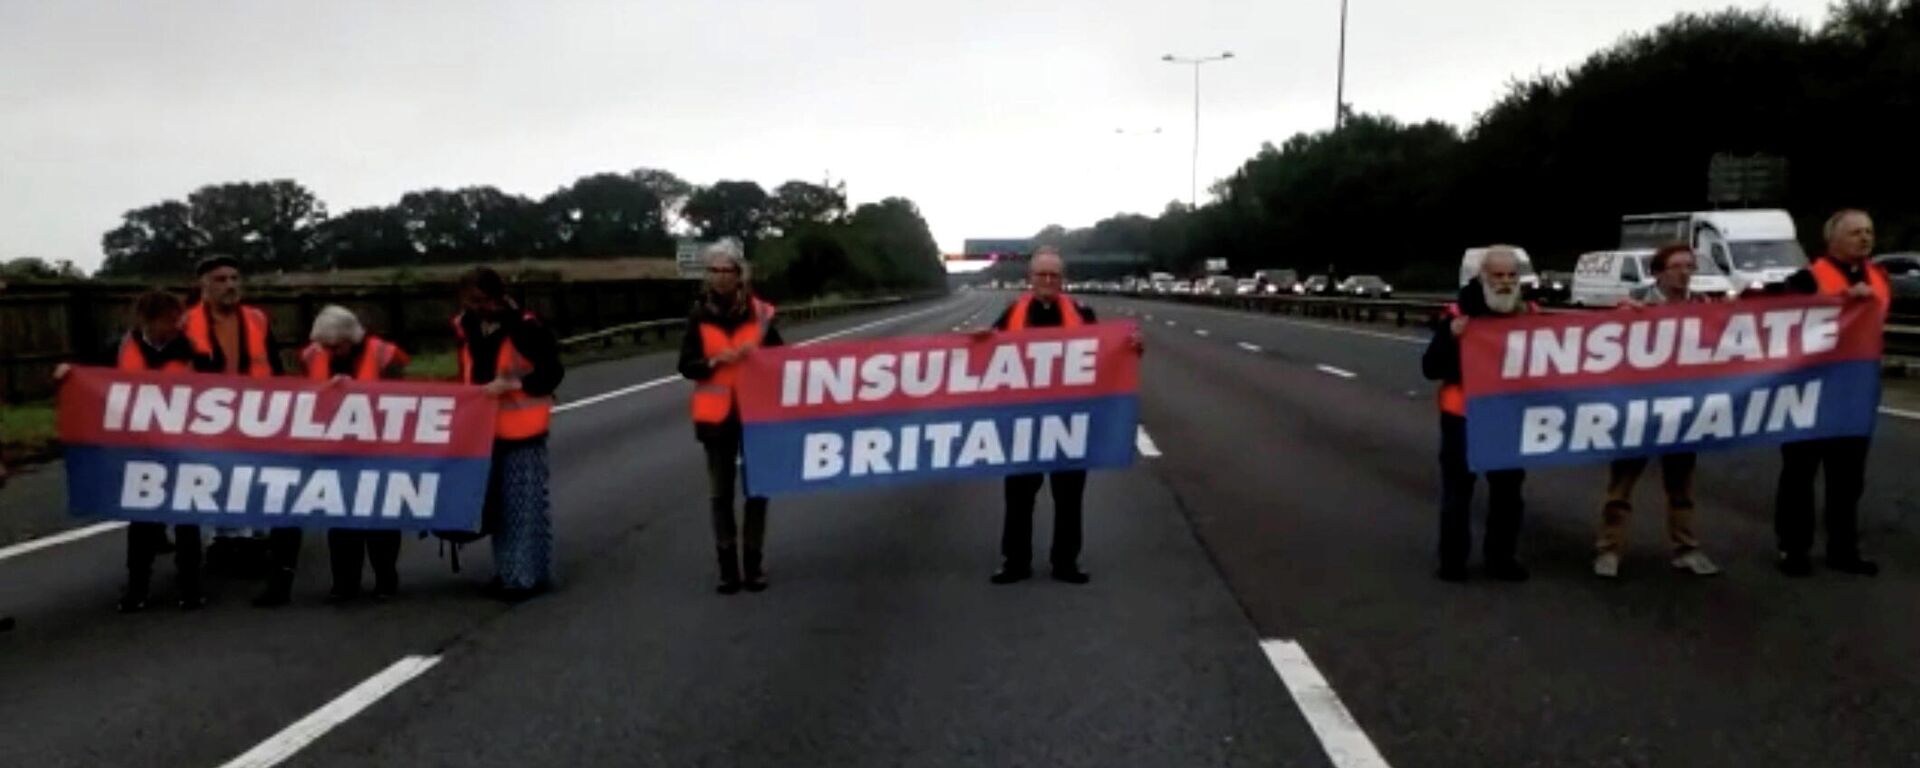 Protest of Insulate Britain on M25 Motorway - Sputnik International, 1920, 17.09.2021